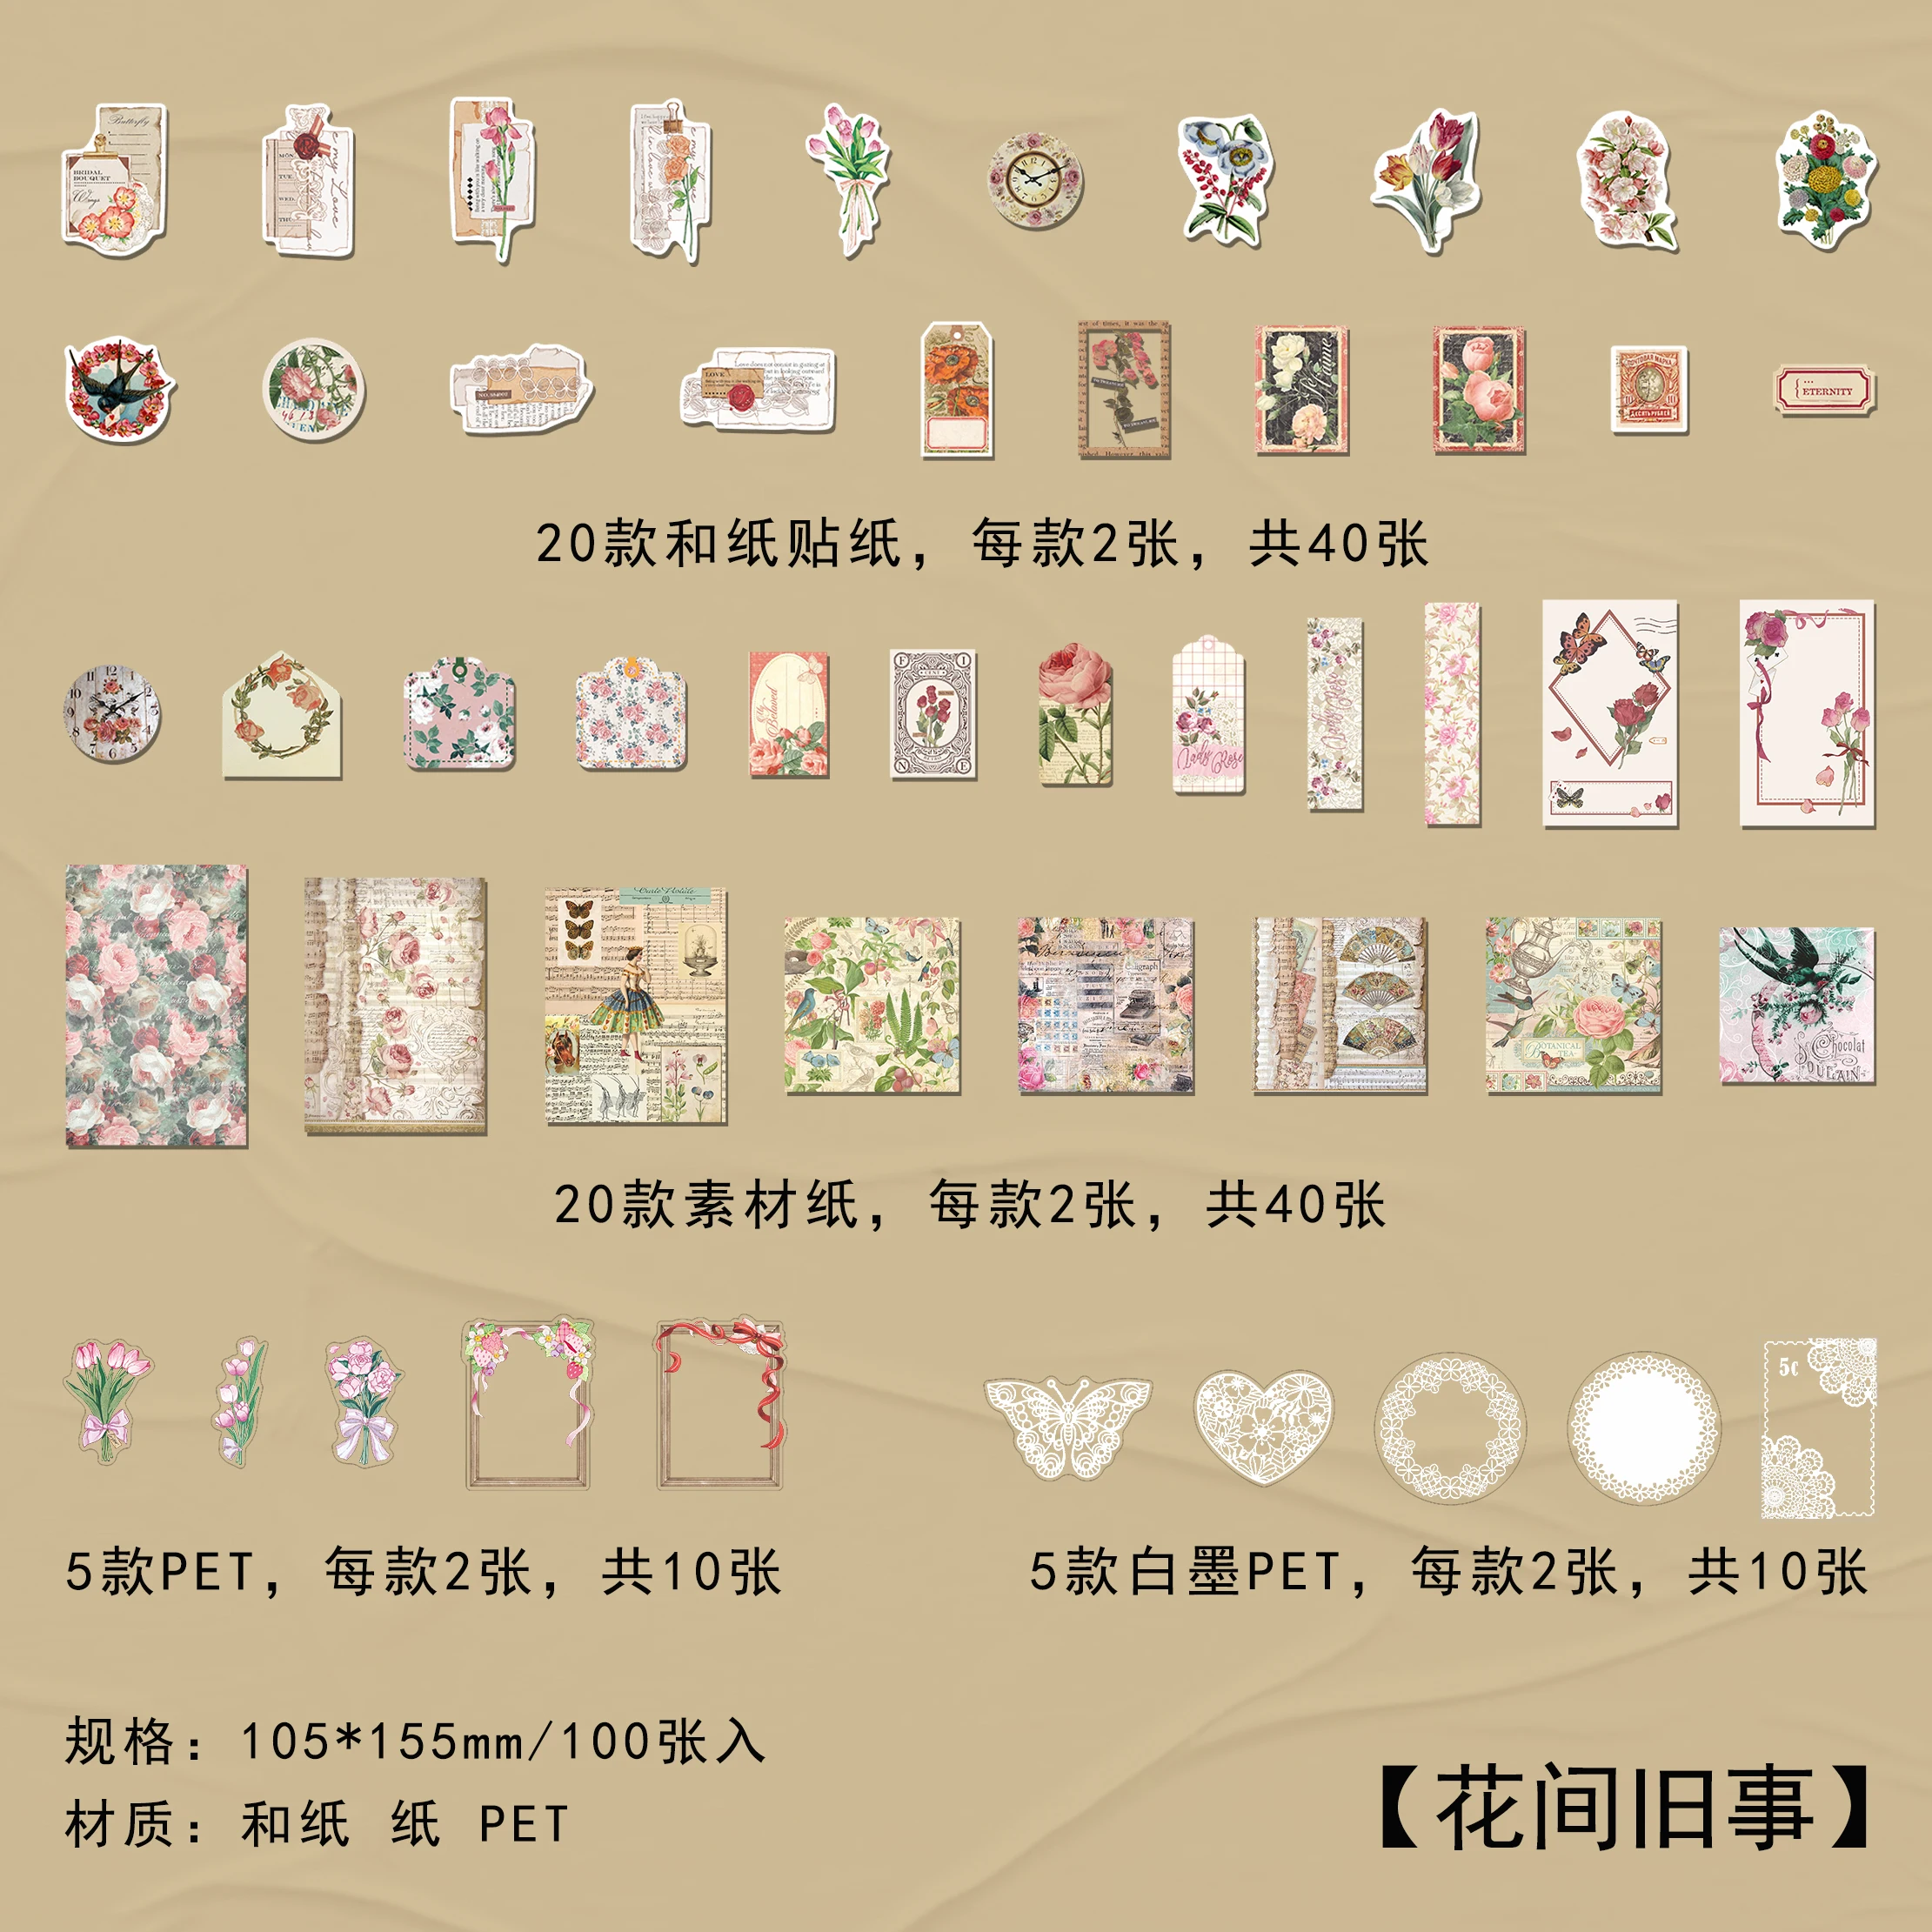 Mr.Paper 4 дизайн Infeel.Me Changfeng Messenger серия Материал пакет пэт креативные канцелярские